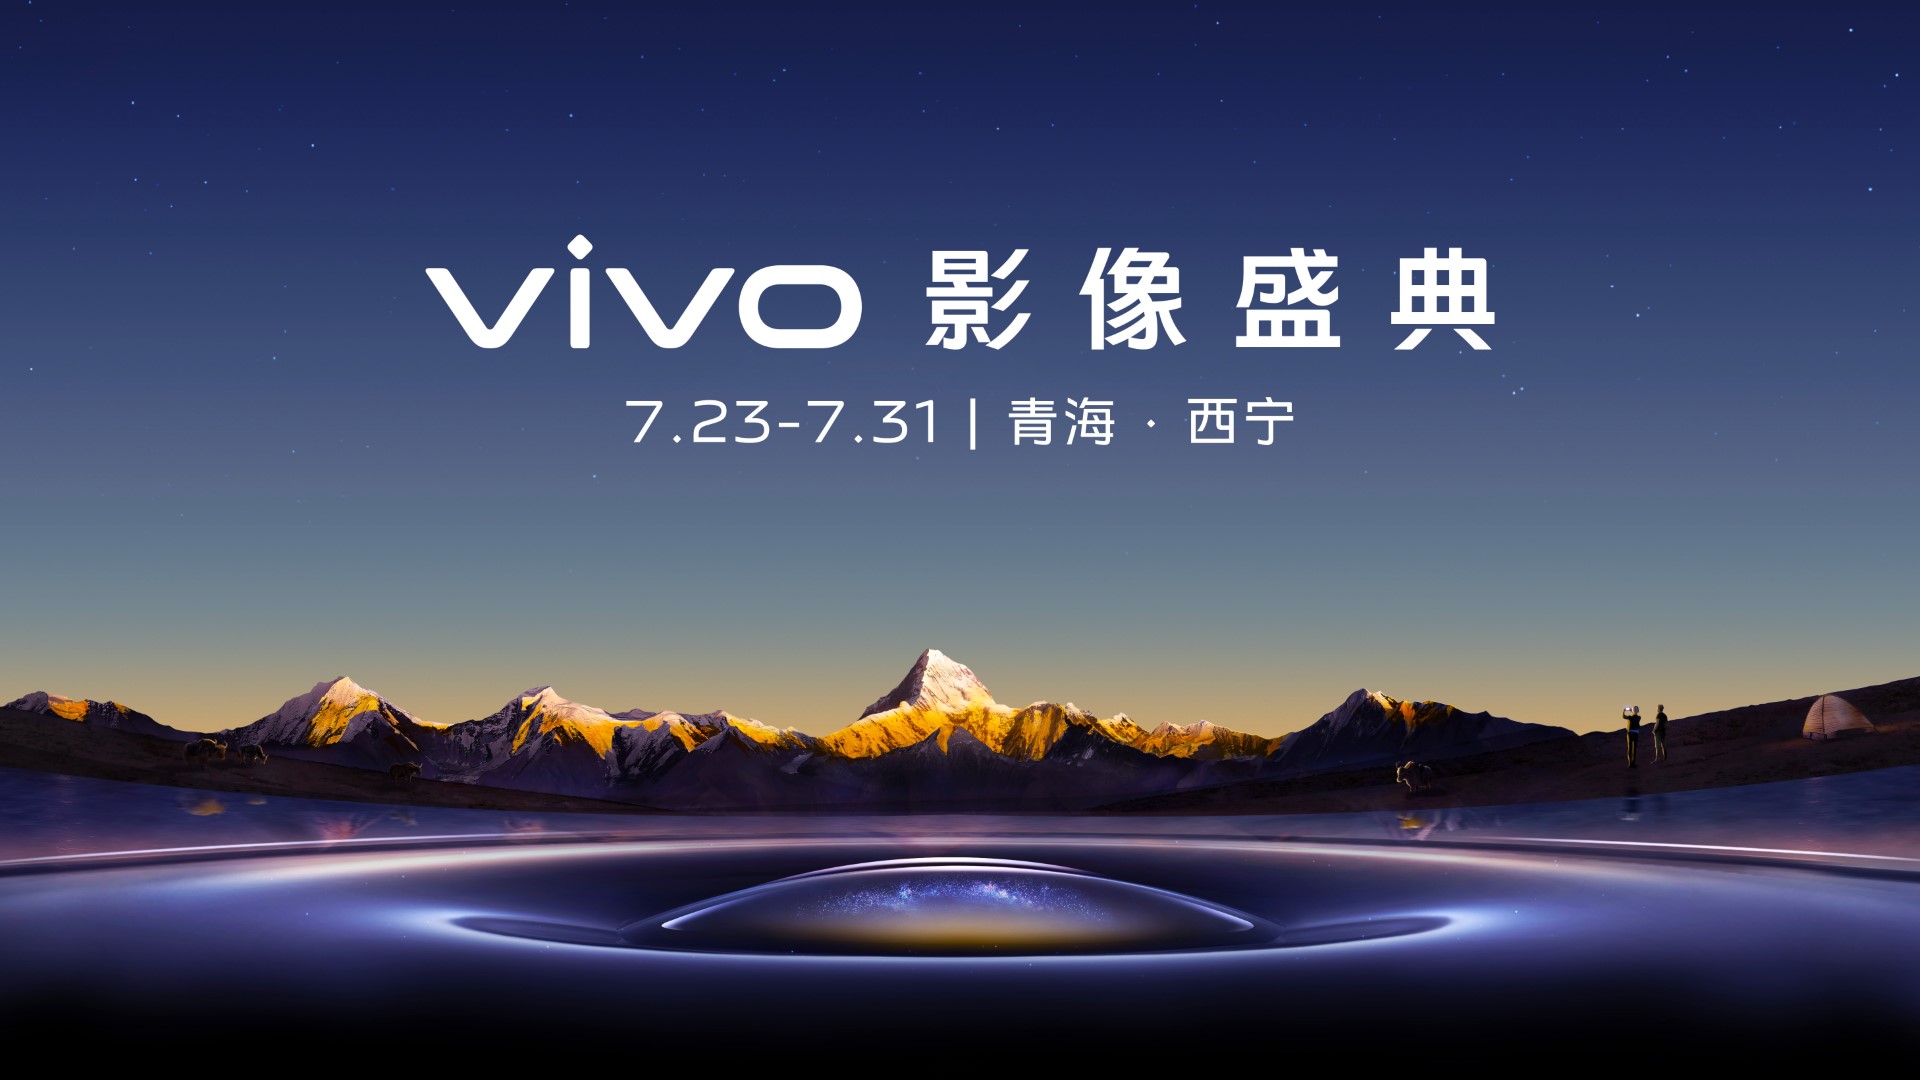 Vivo launches Vivo V3 and Vivo V3 Max in India with full metal body ...